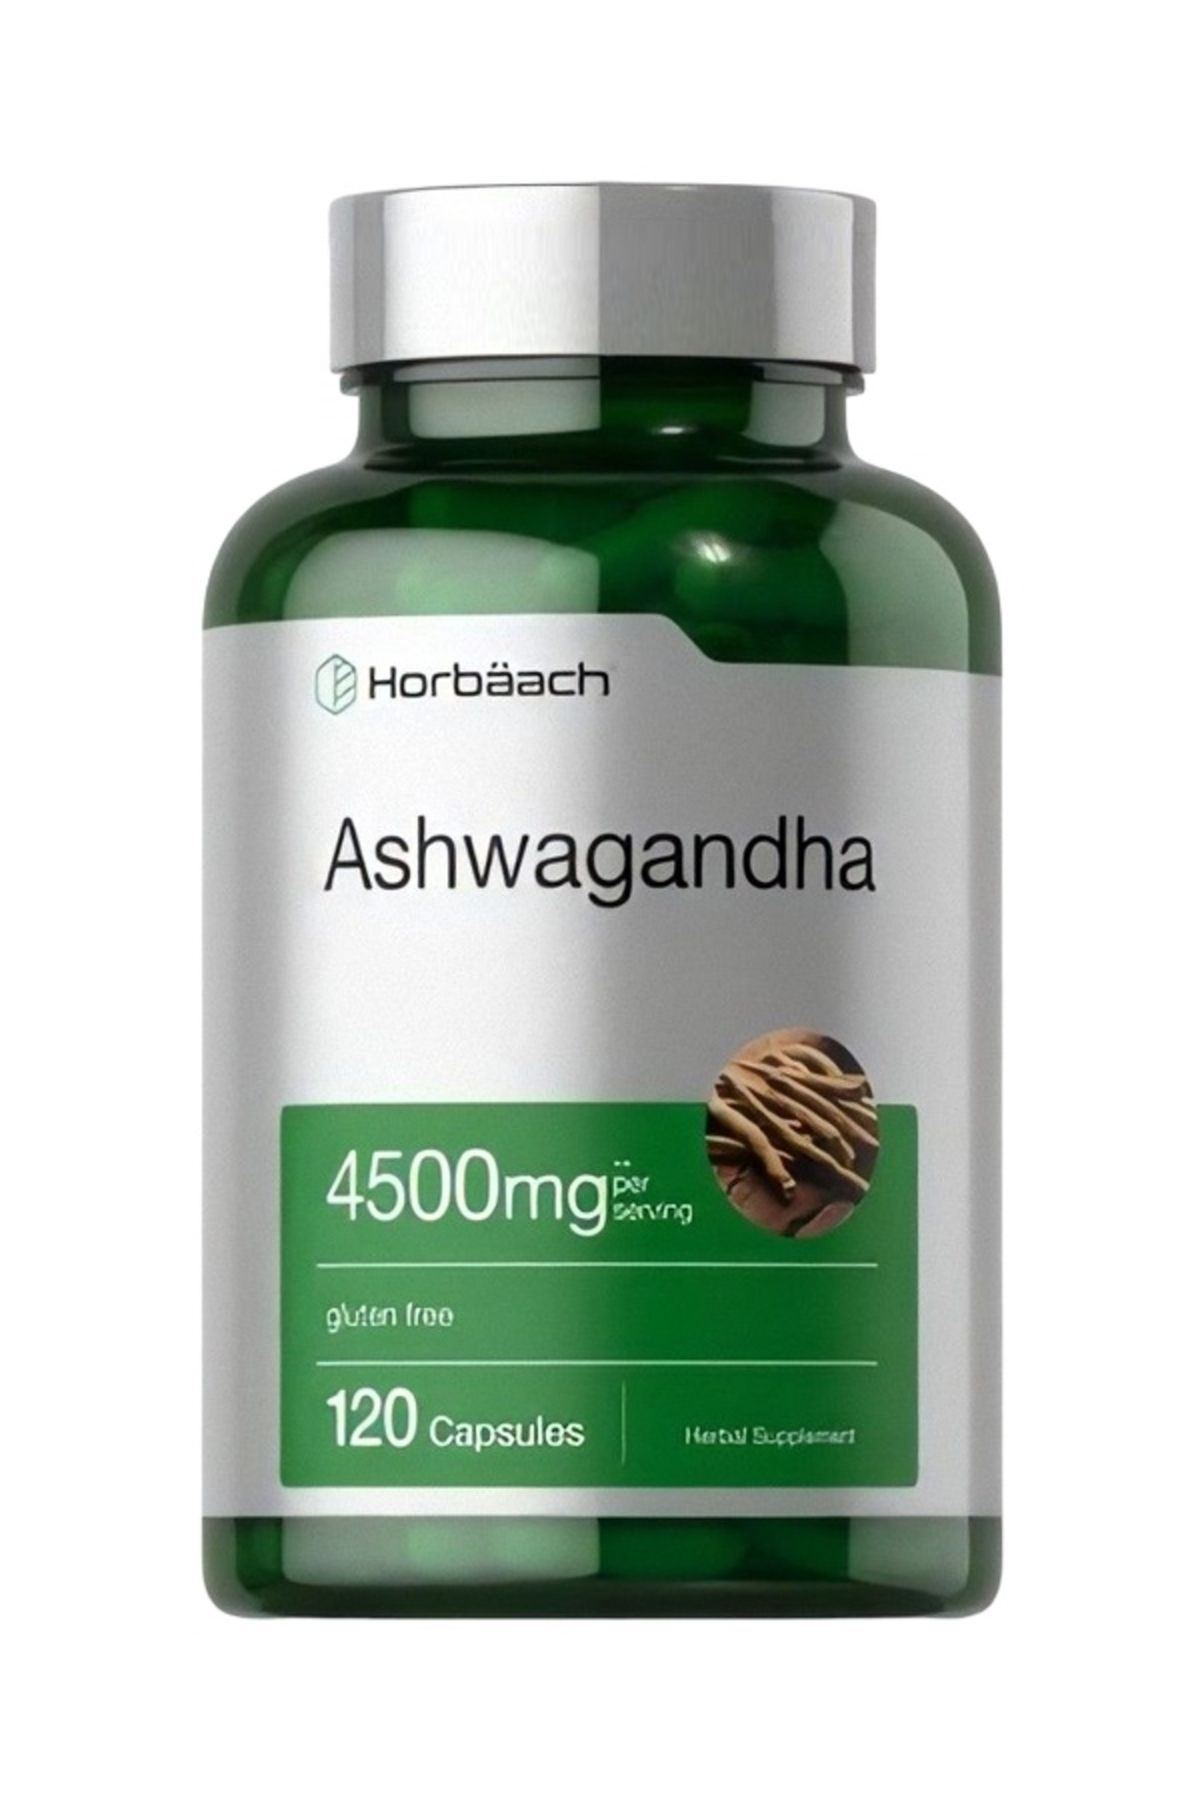 AGROHEAL Horbach Ashwagandhaa supplement 120 kapsül 1500mg